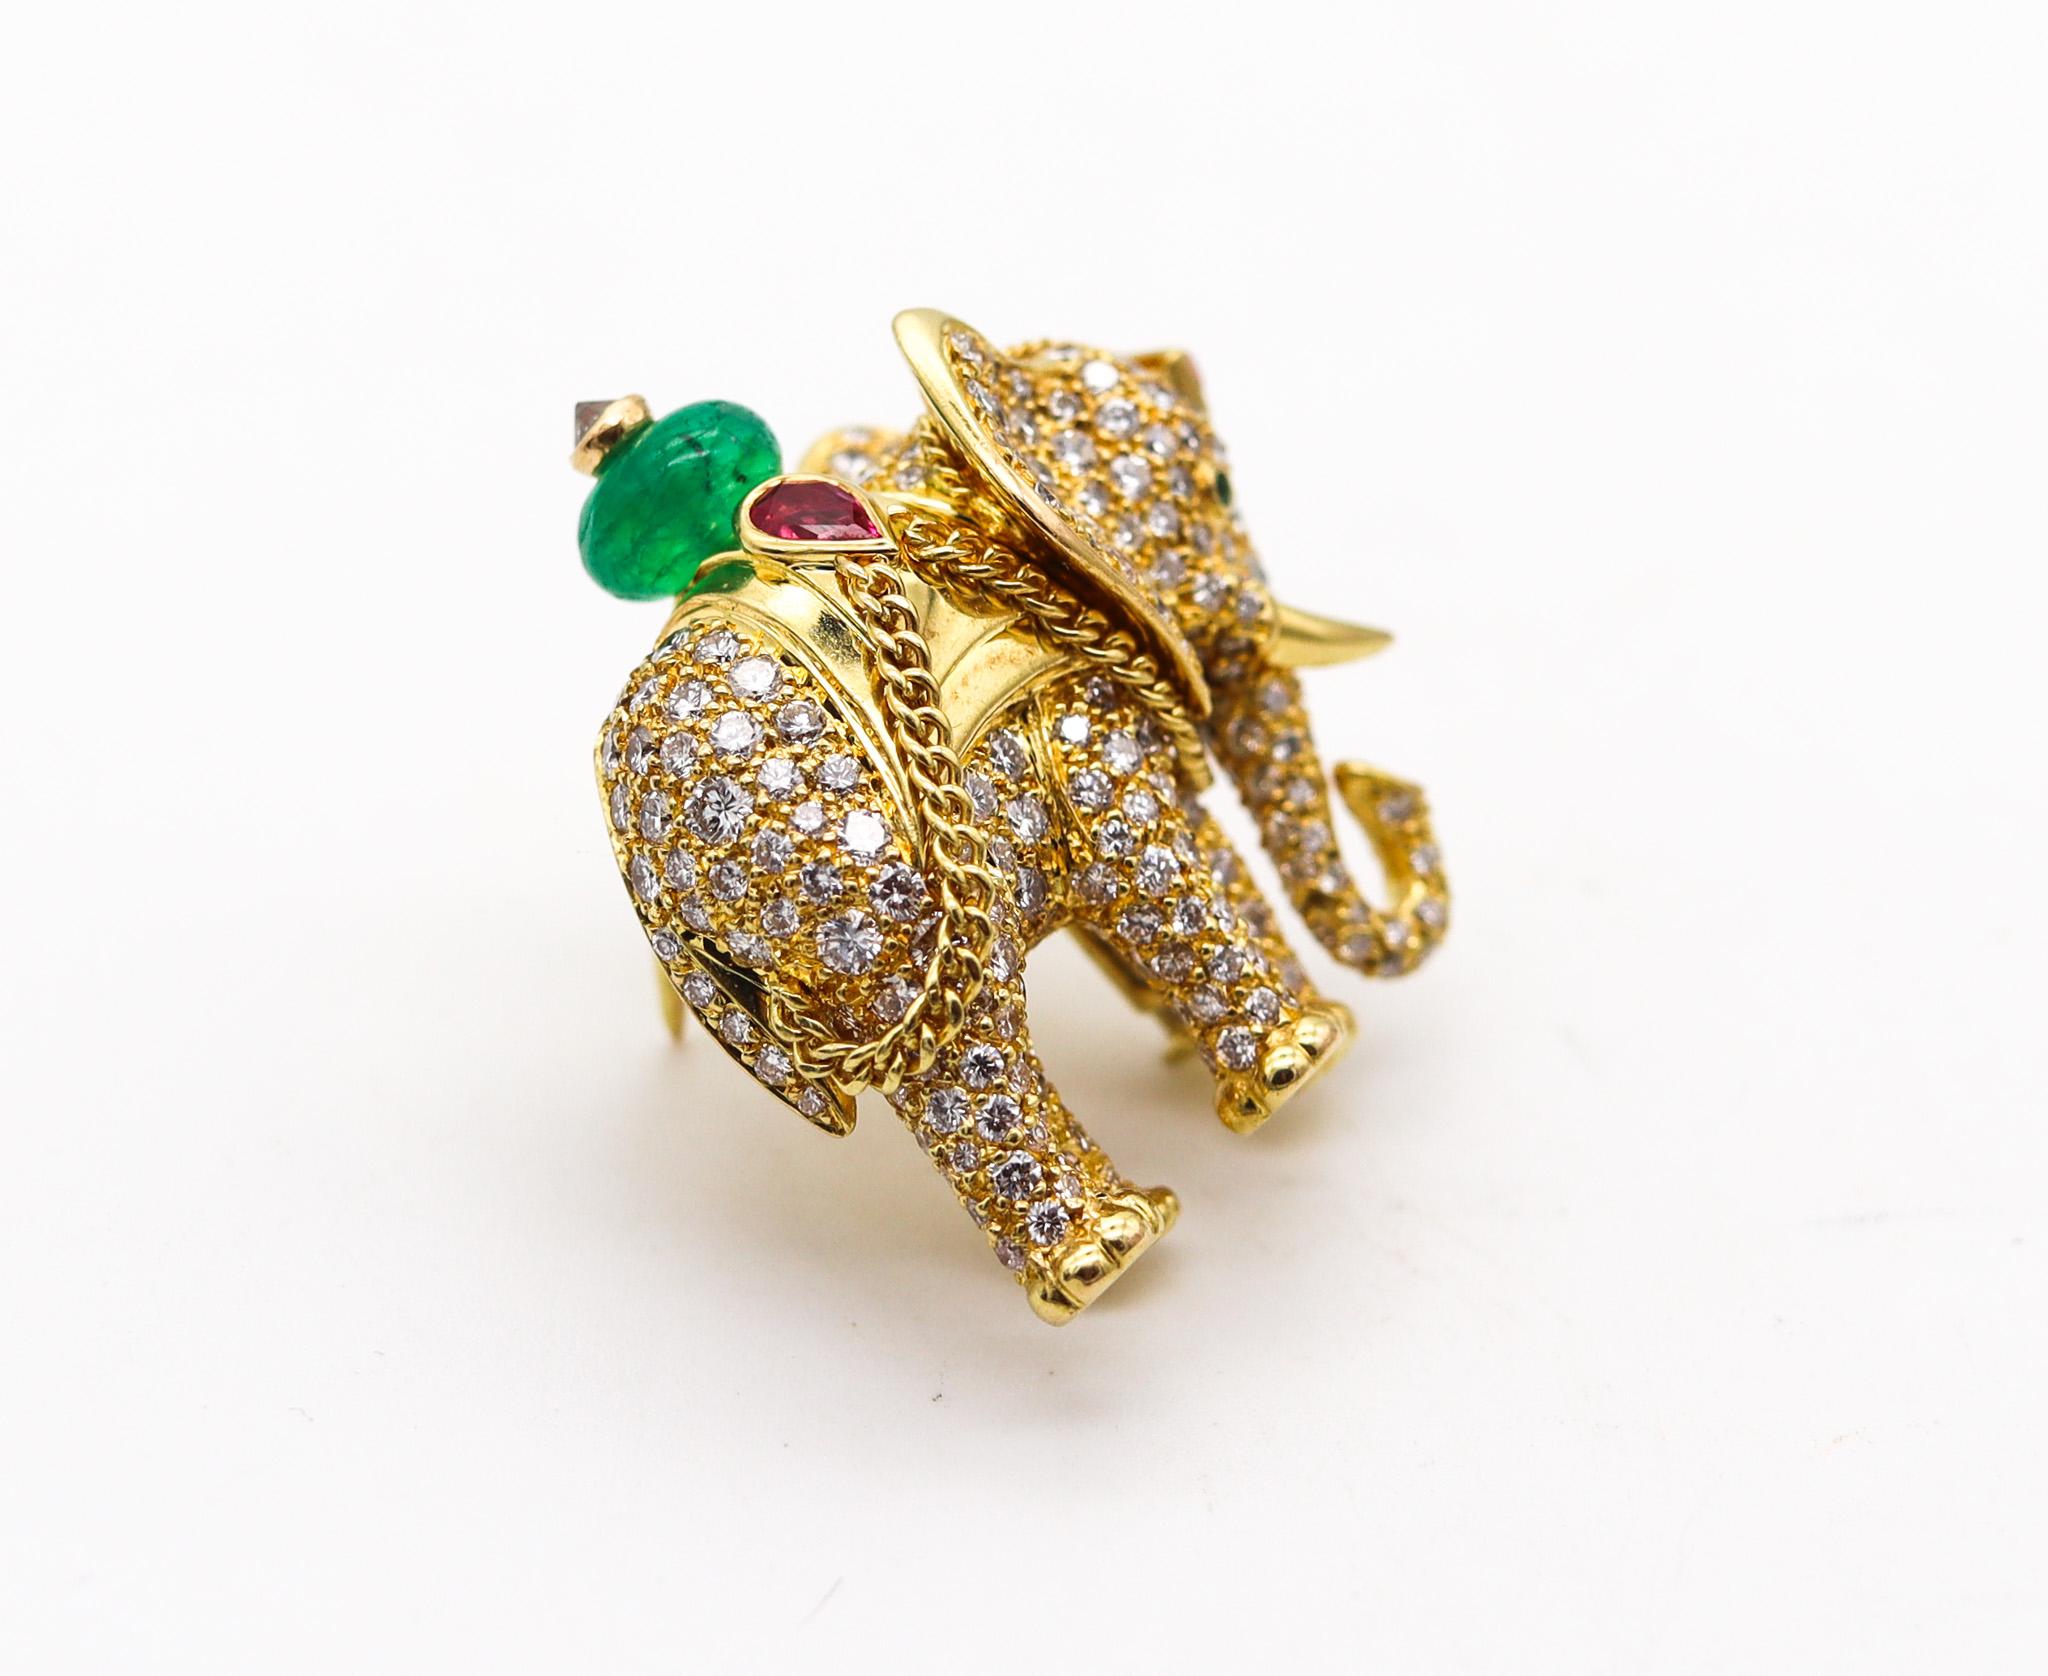 Mixed Cut Cartier Paris Elephant Brooch 18Kt Gold With 5.24 Ctw Diamonds Emeralds & Rubies For Sale